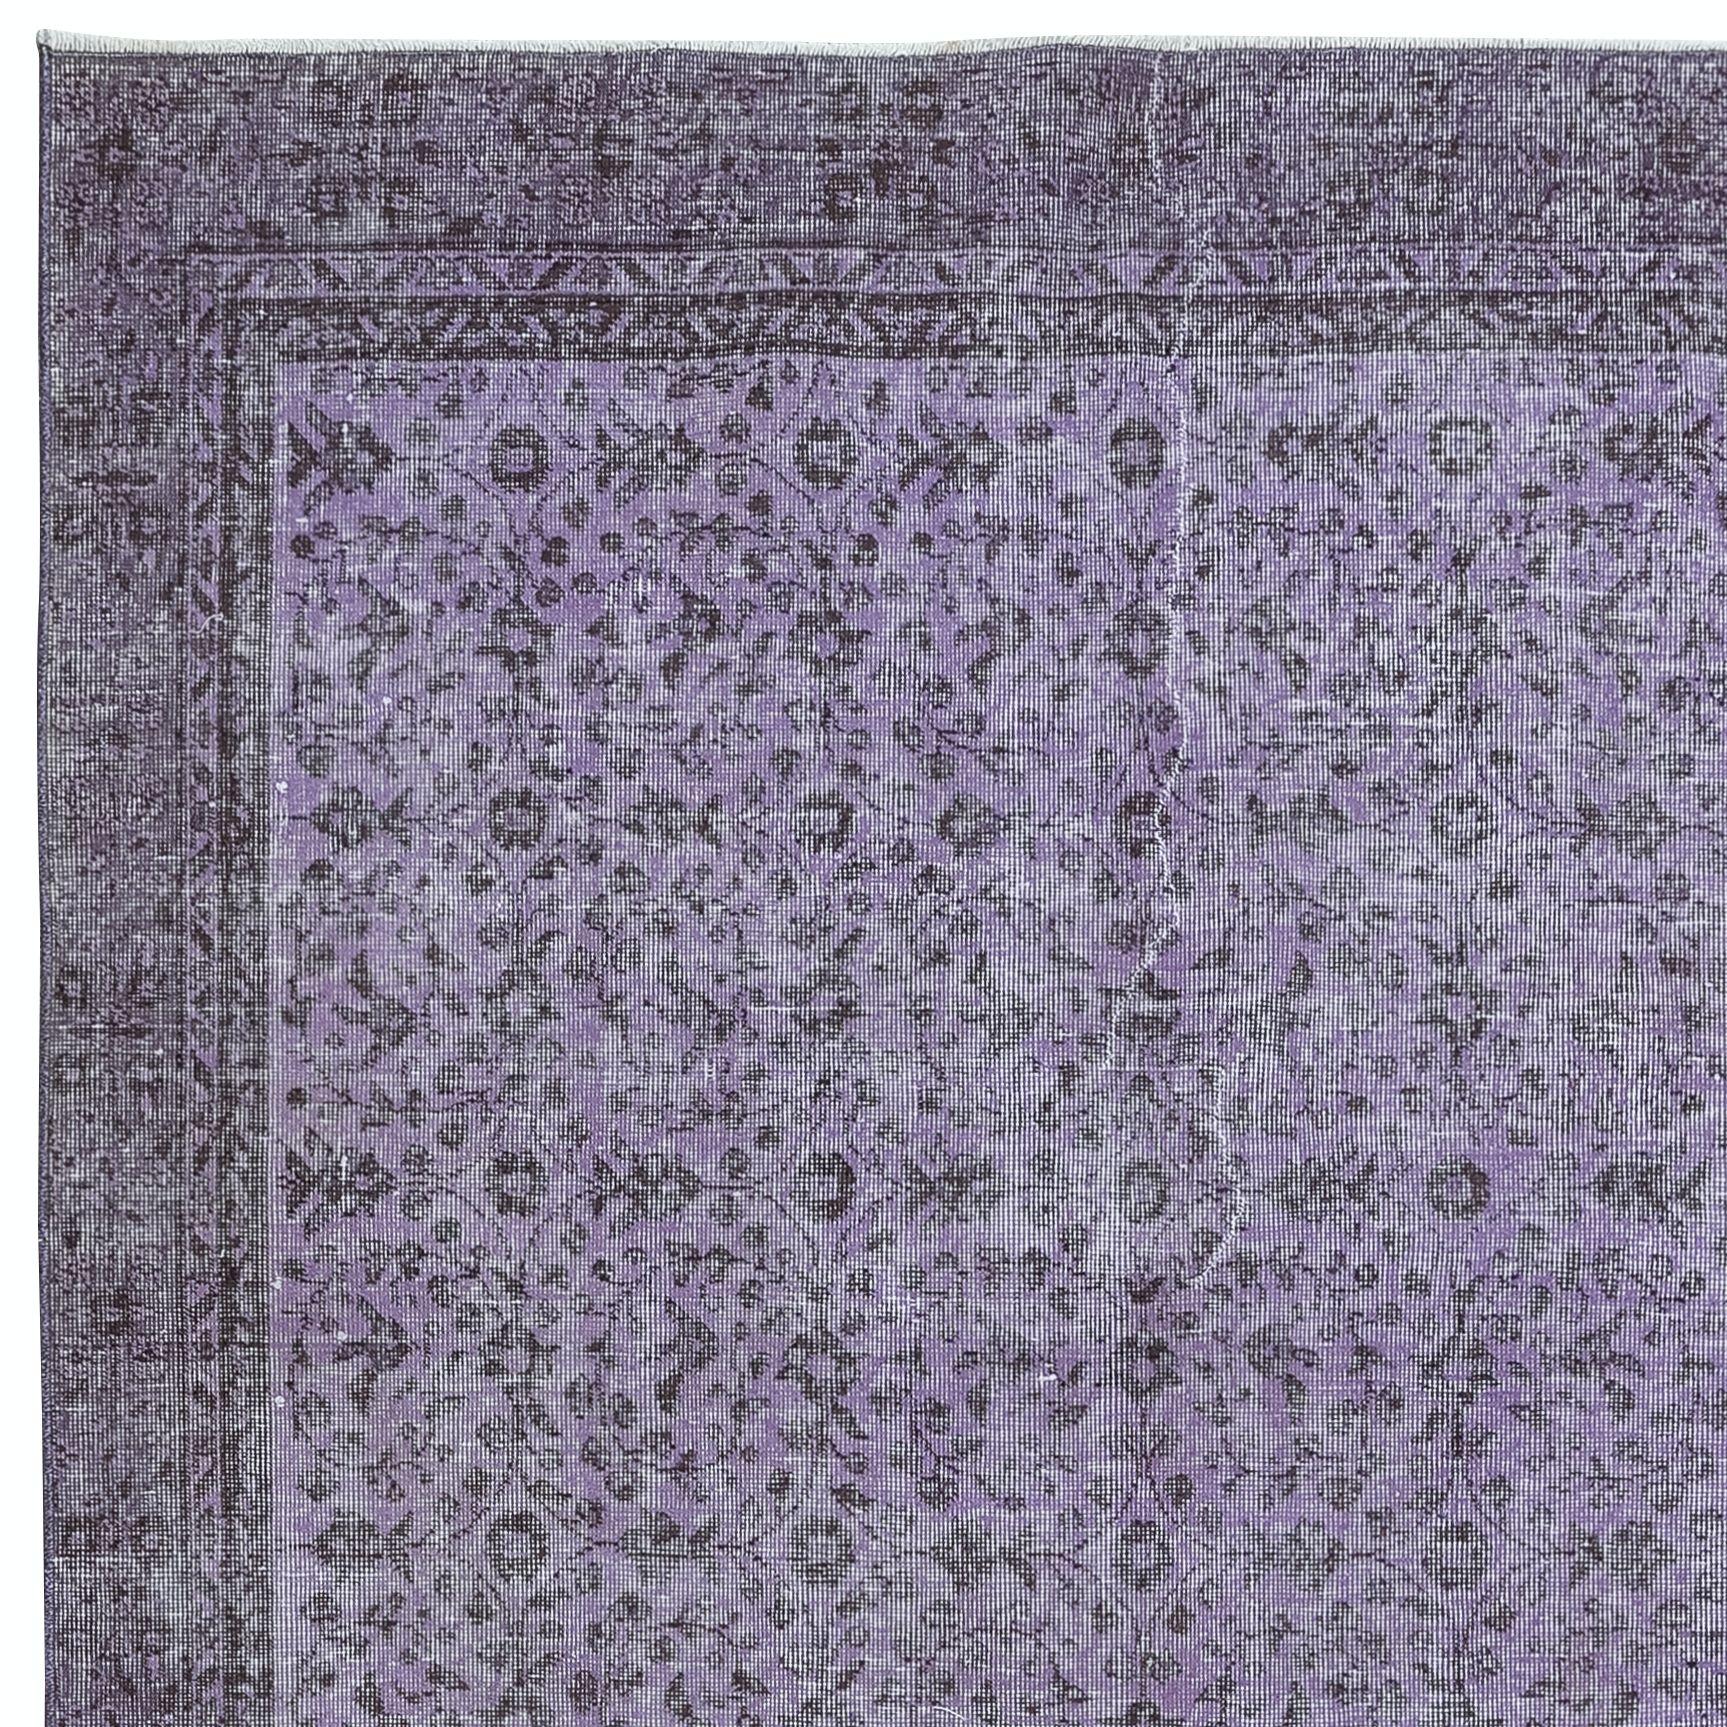 Hand-Woven 5.8x9.3 Ft Handmade Turkish Rug, Modern Orchid Purple Carpet, Bohem Home Decor For Sale